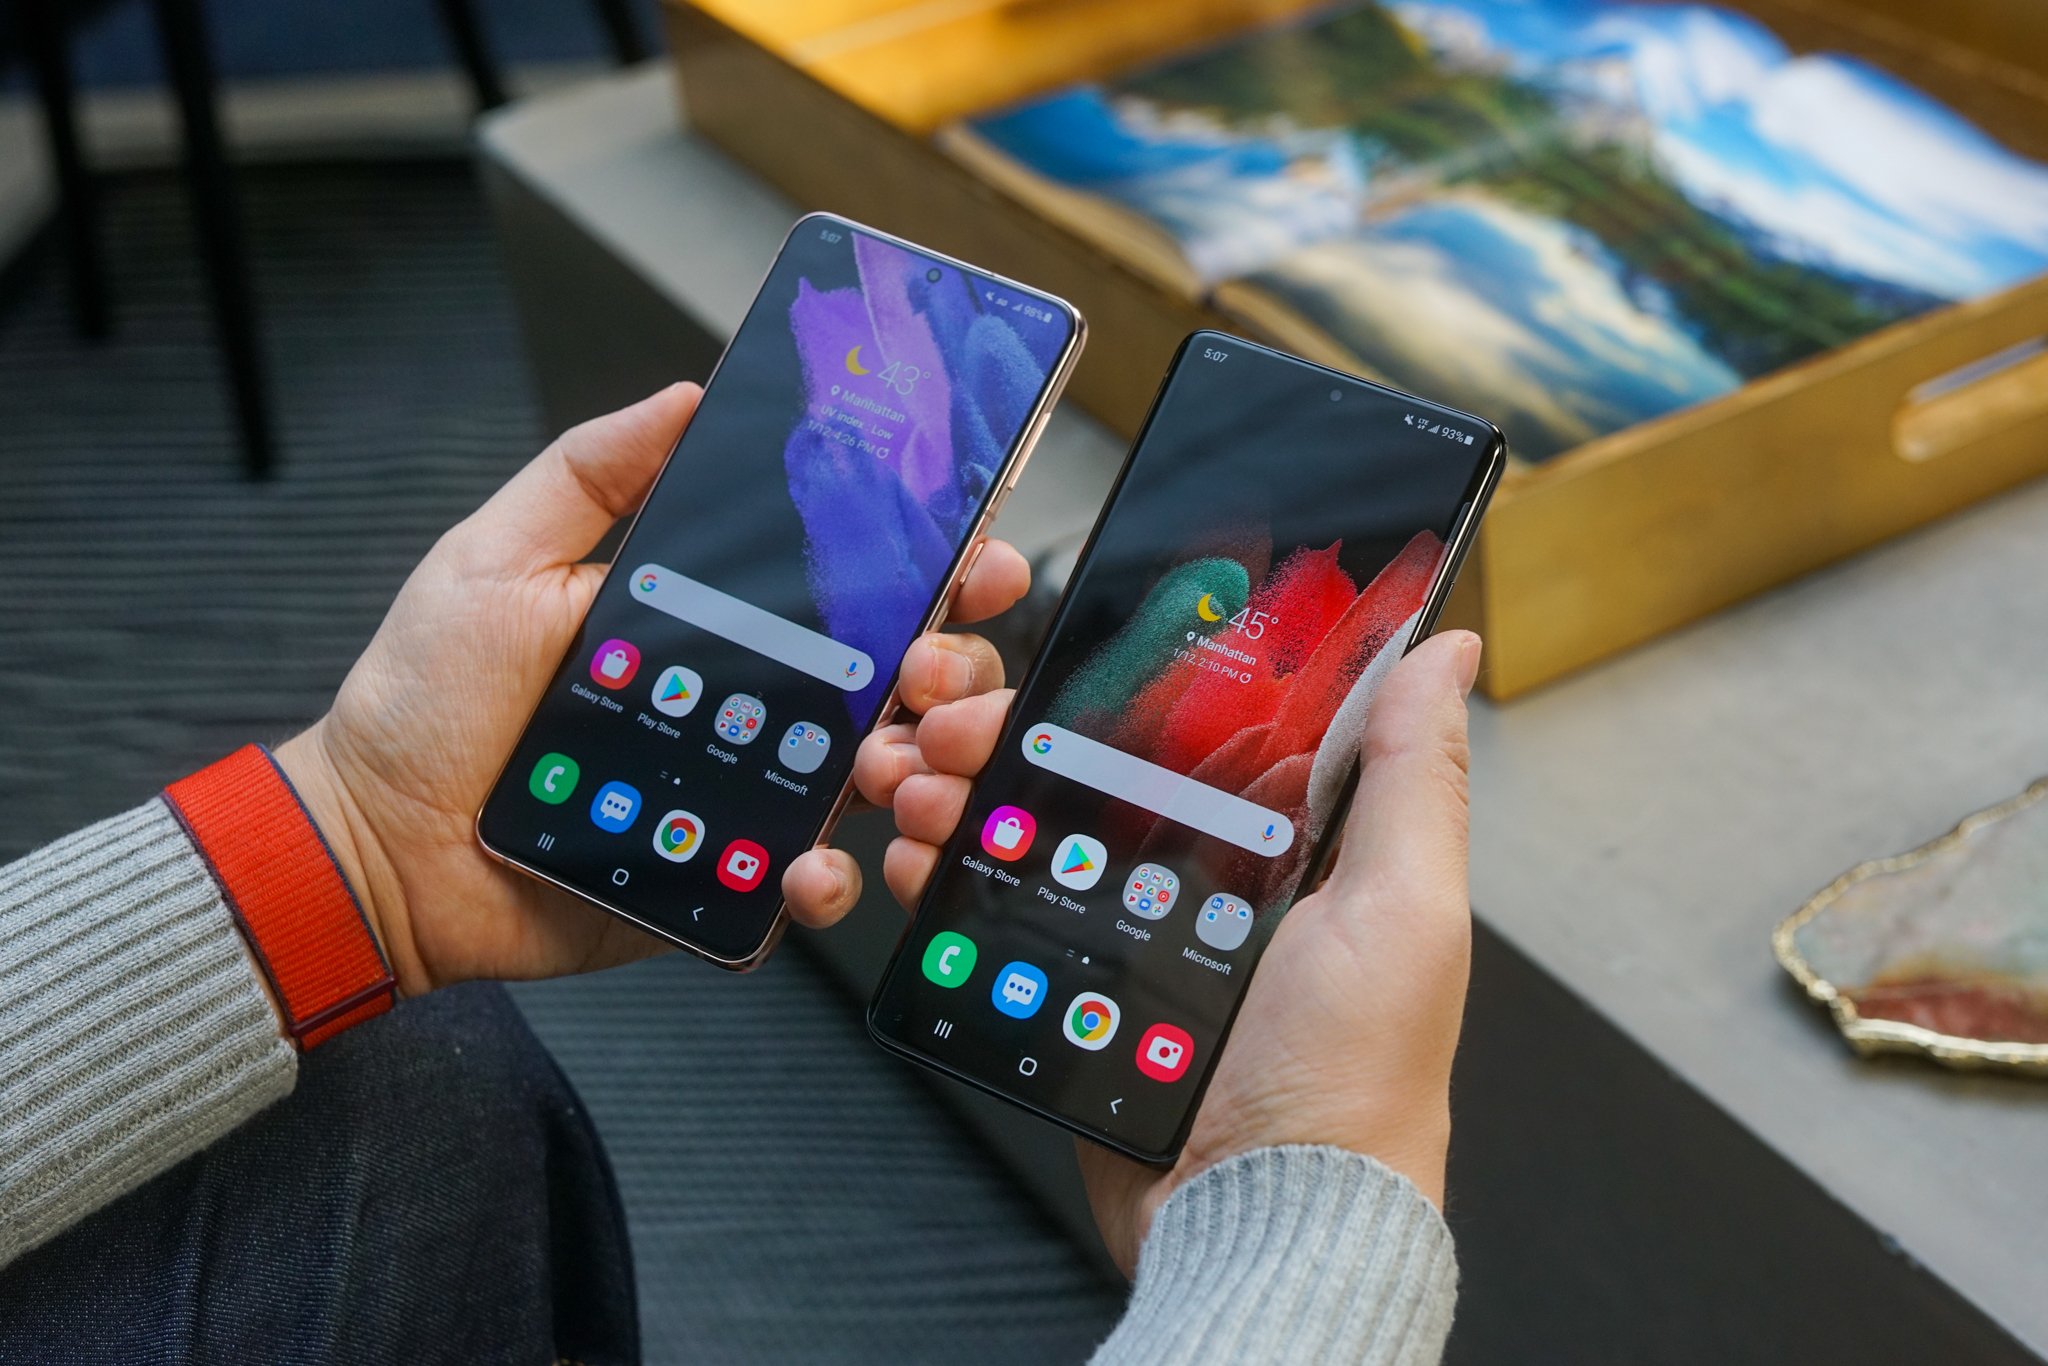 Rubber De controle krijgen Sandalen Best Black Friday Samsung Galaxy deals 2021: Big trade-in deals and more |  Android Central